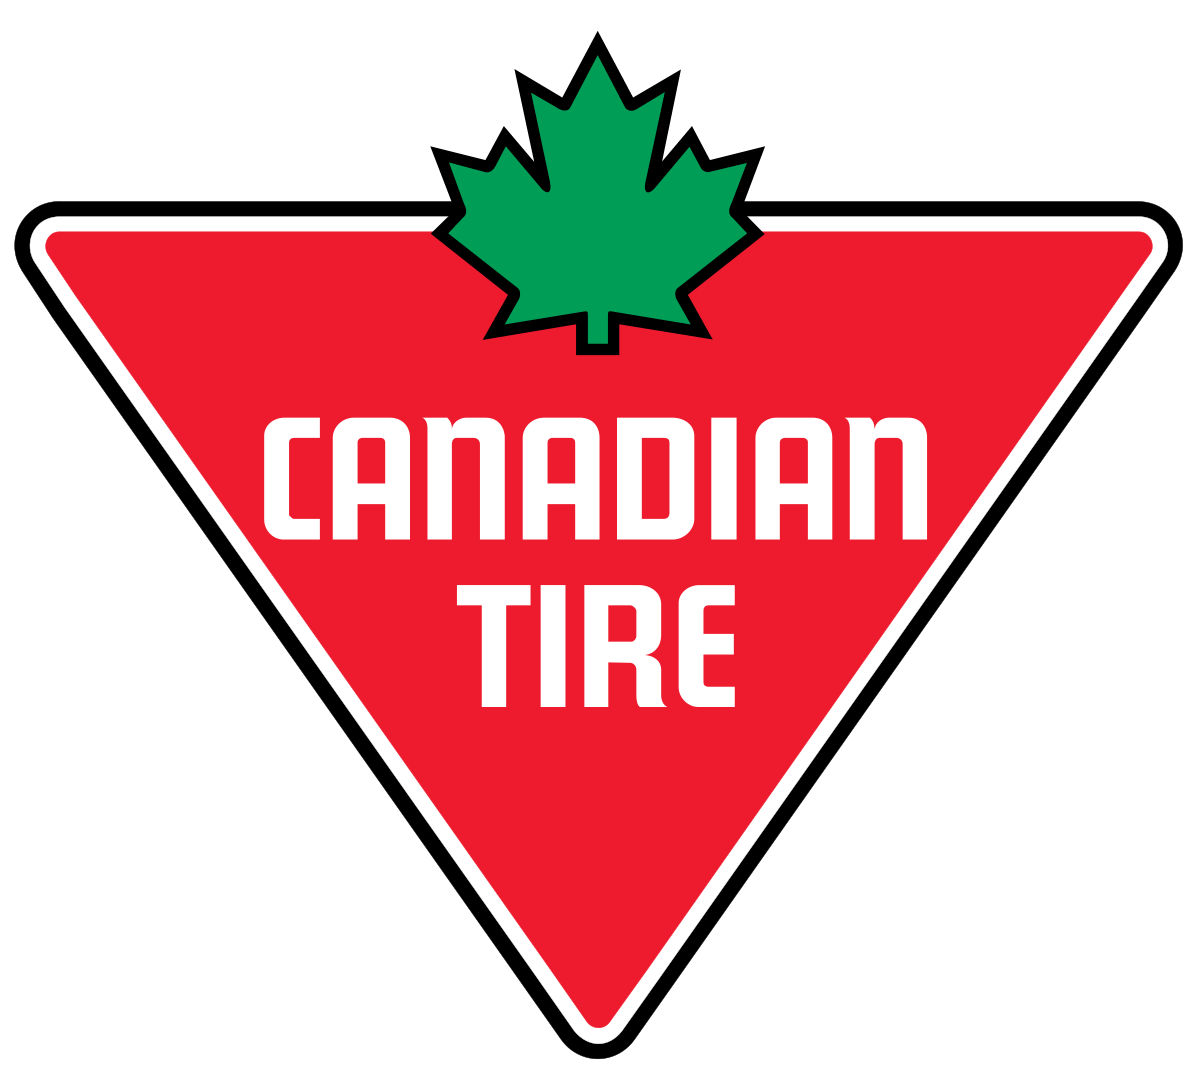 Canada's Logo - Canadian Tire